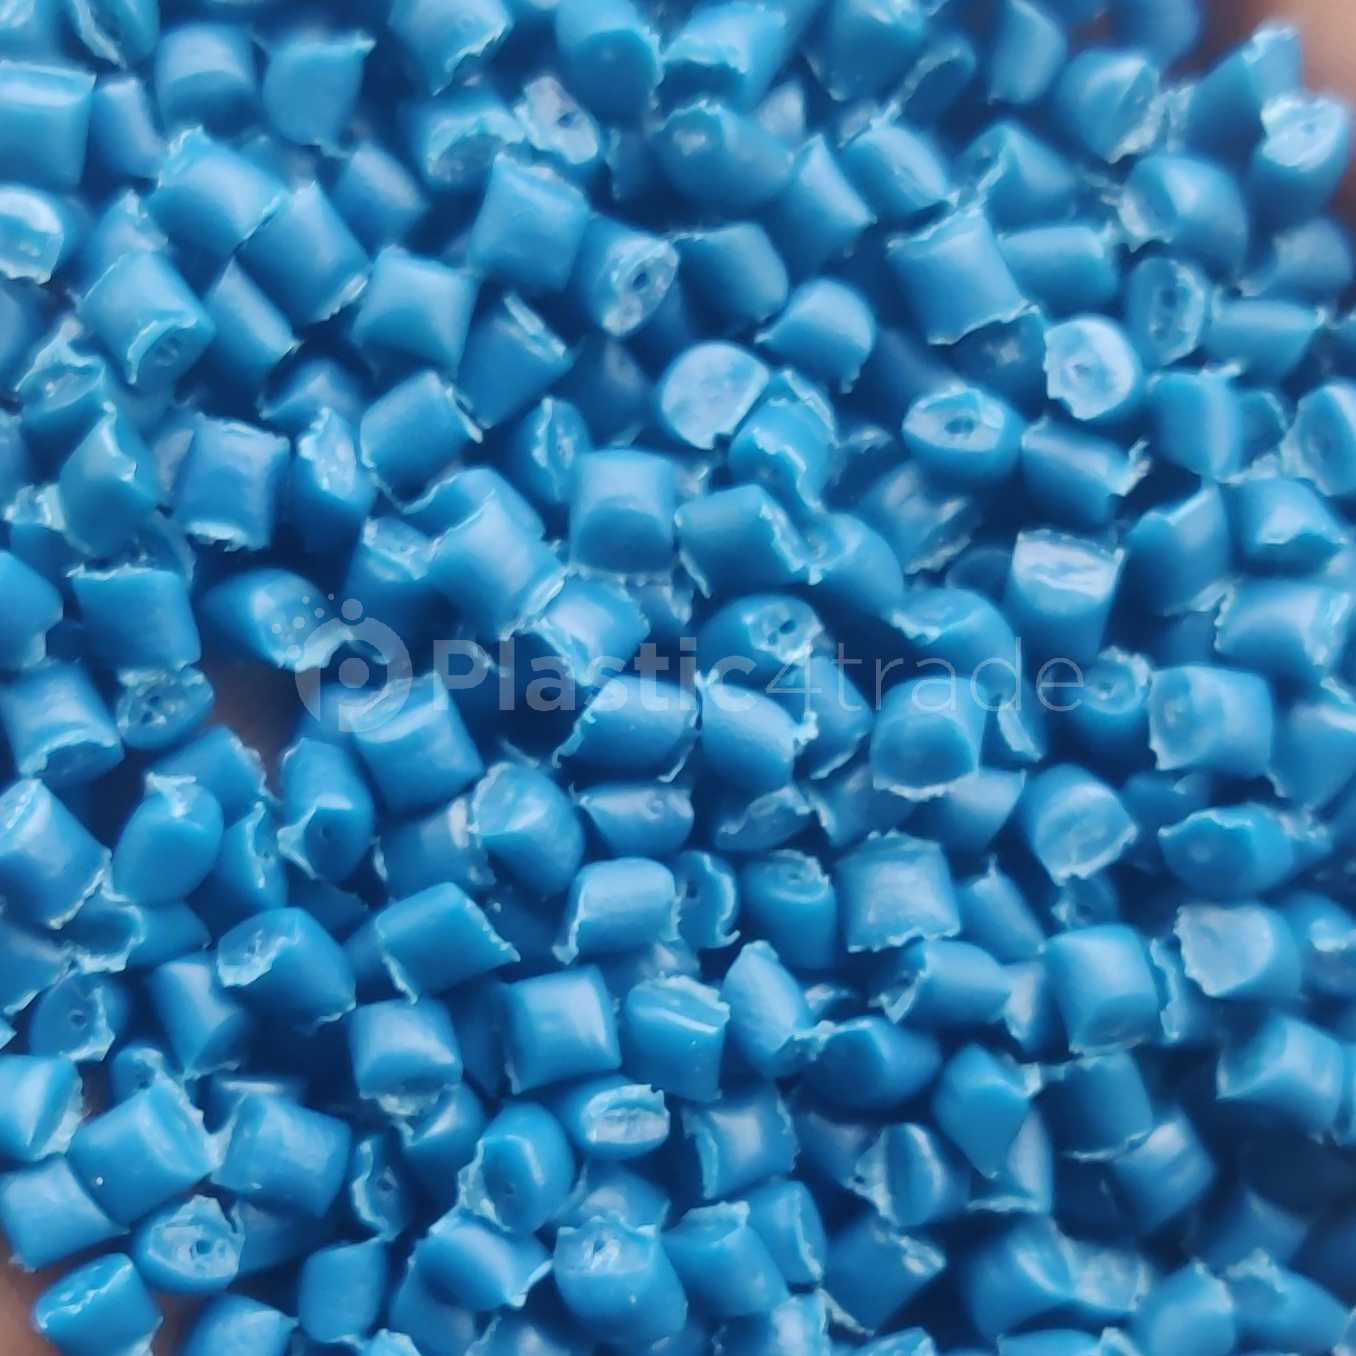 HDPE 7000F HDPE Reprocess Granule Blow tamil nadu india Plastic4trade